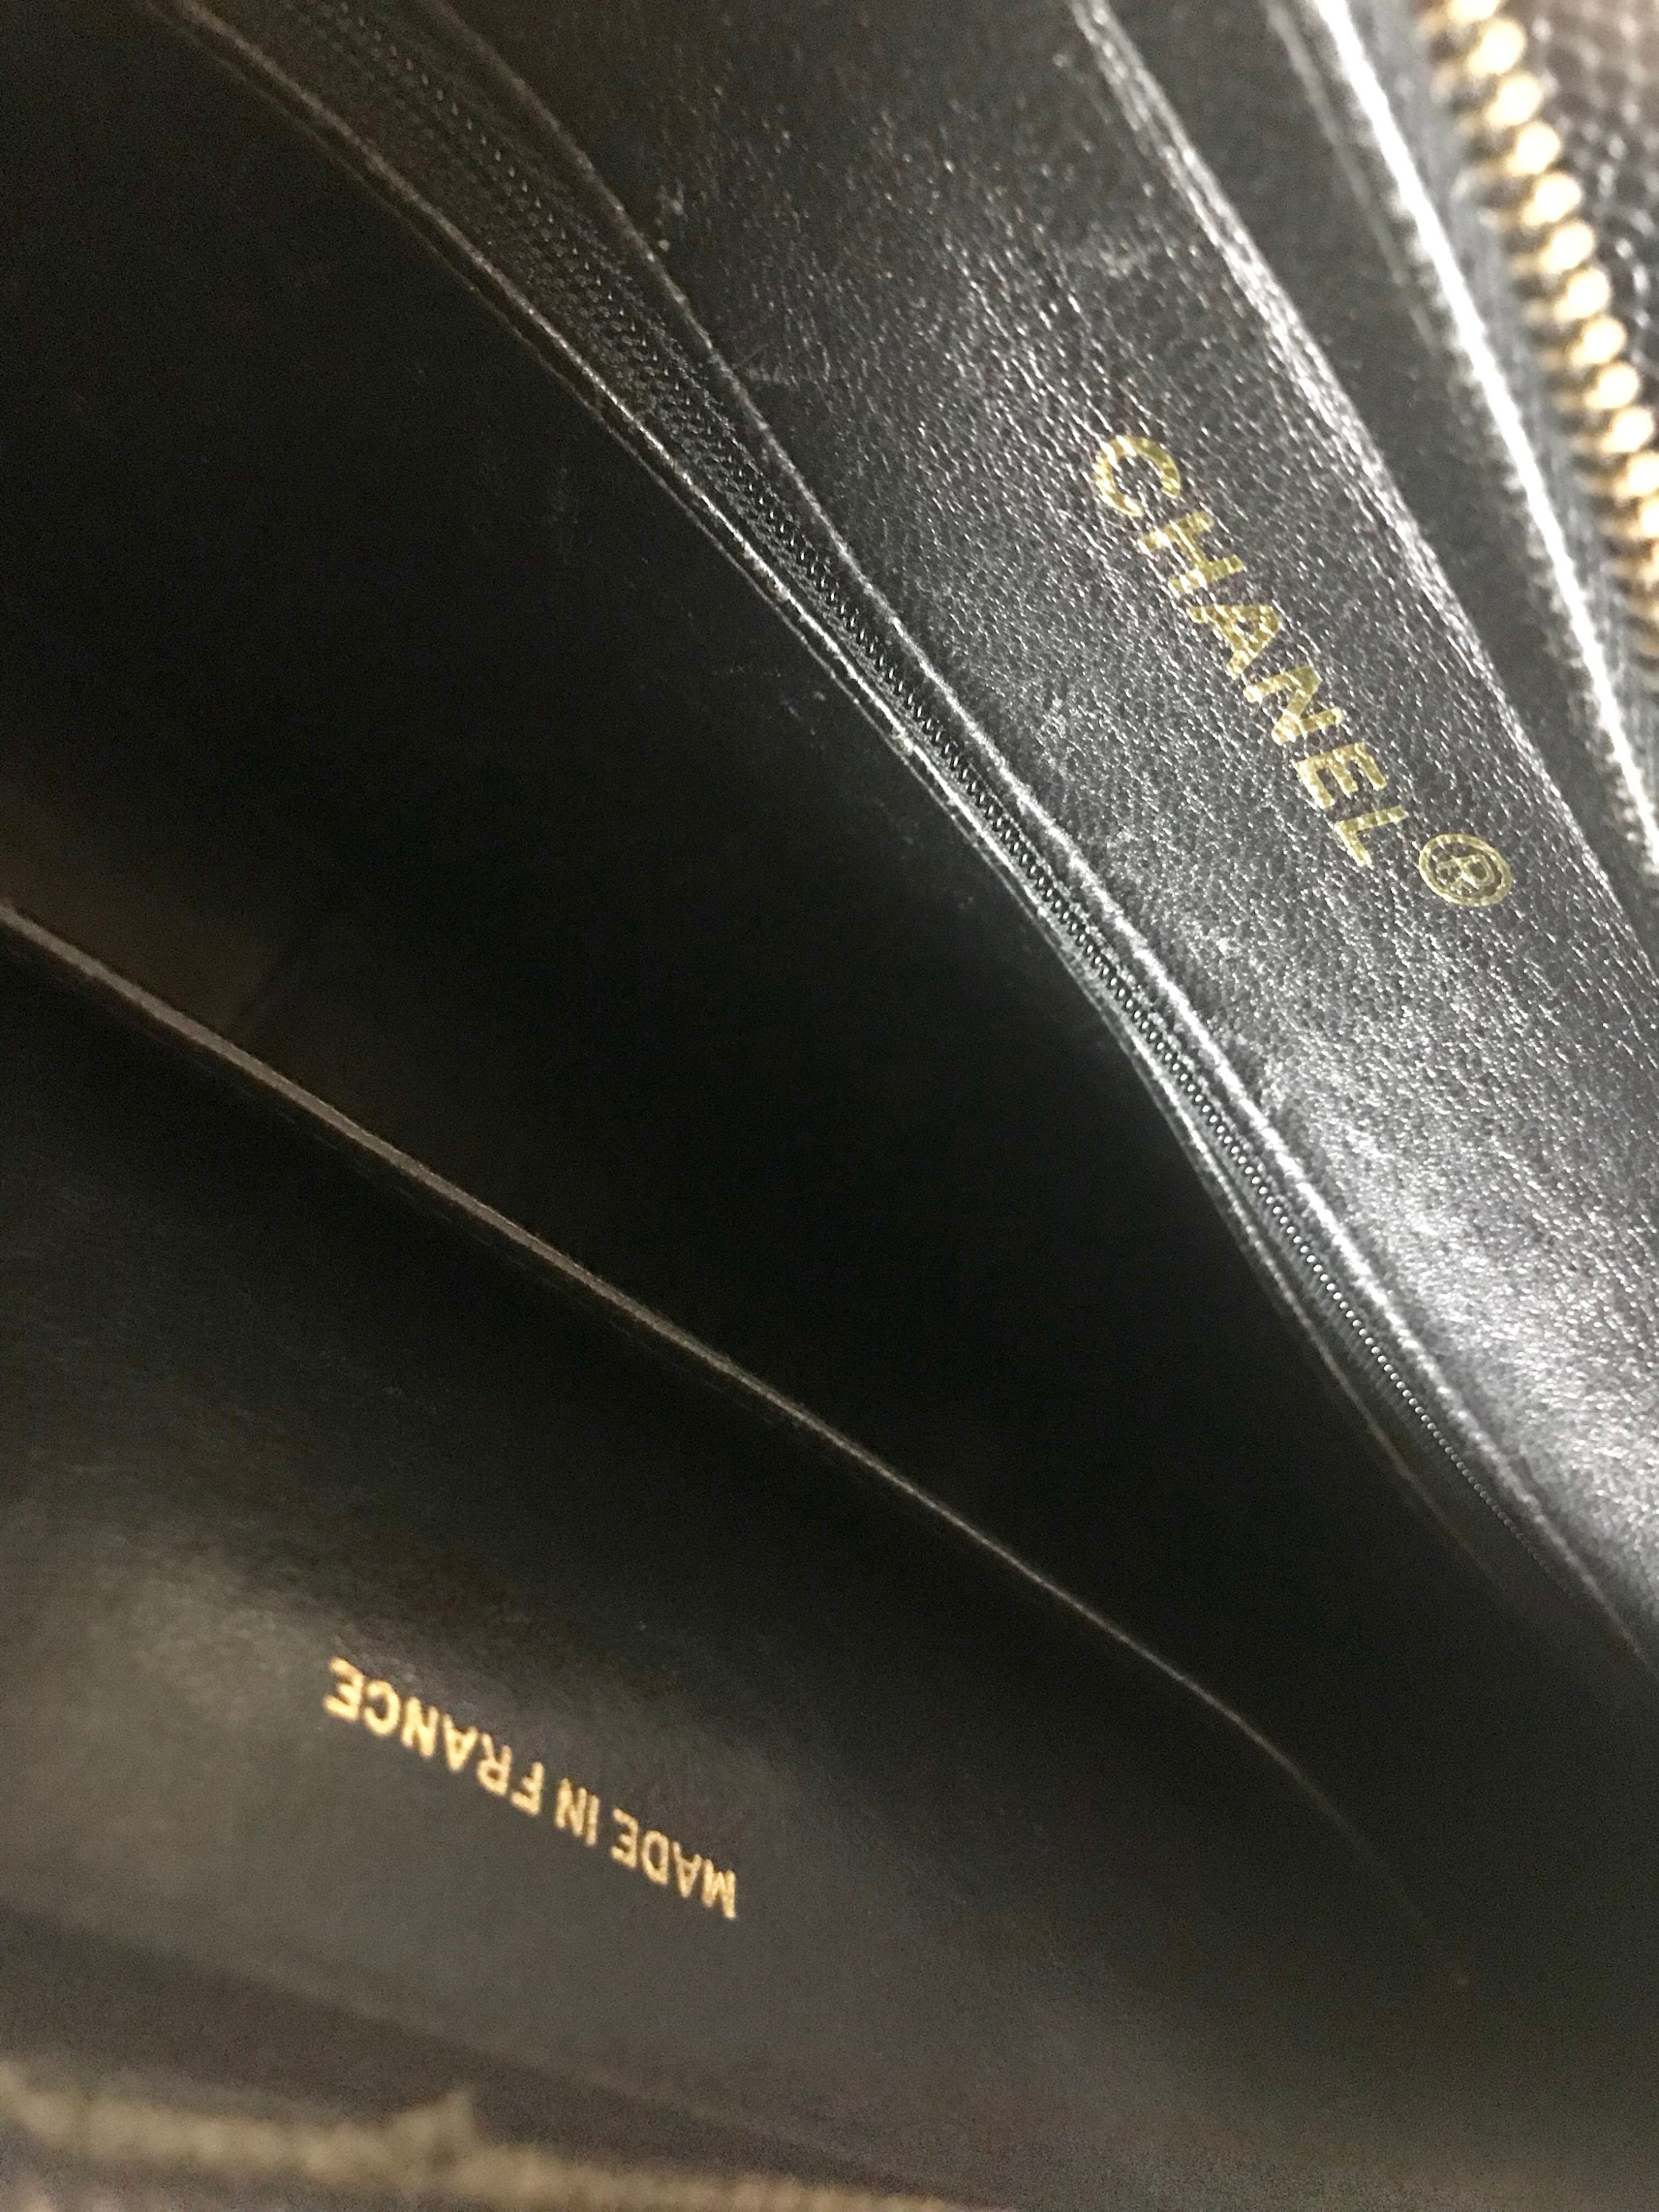 Pre-owned Chanel 2000-2002 Cc Matelassé Bracelet Bag In Black